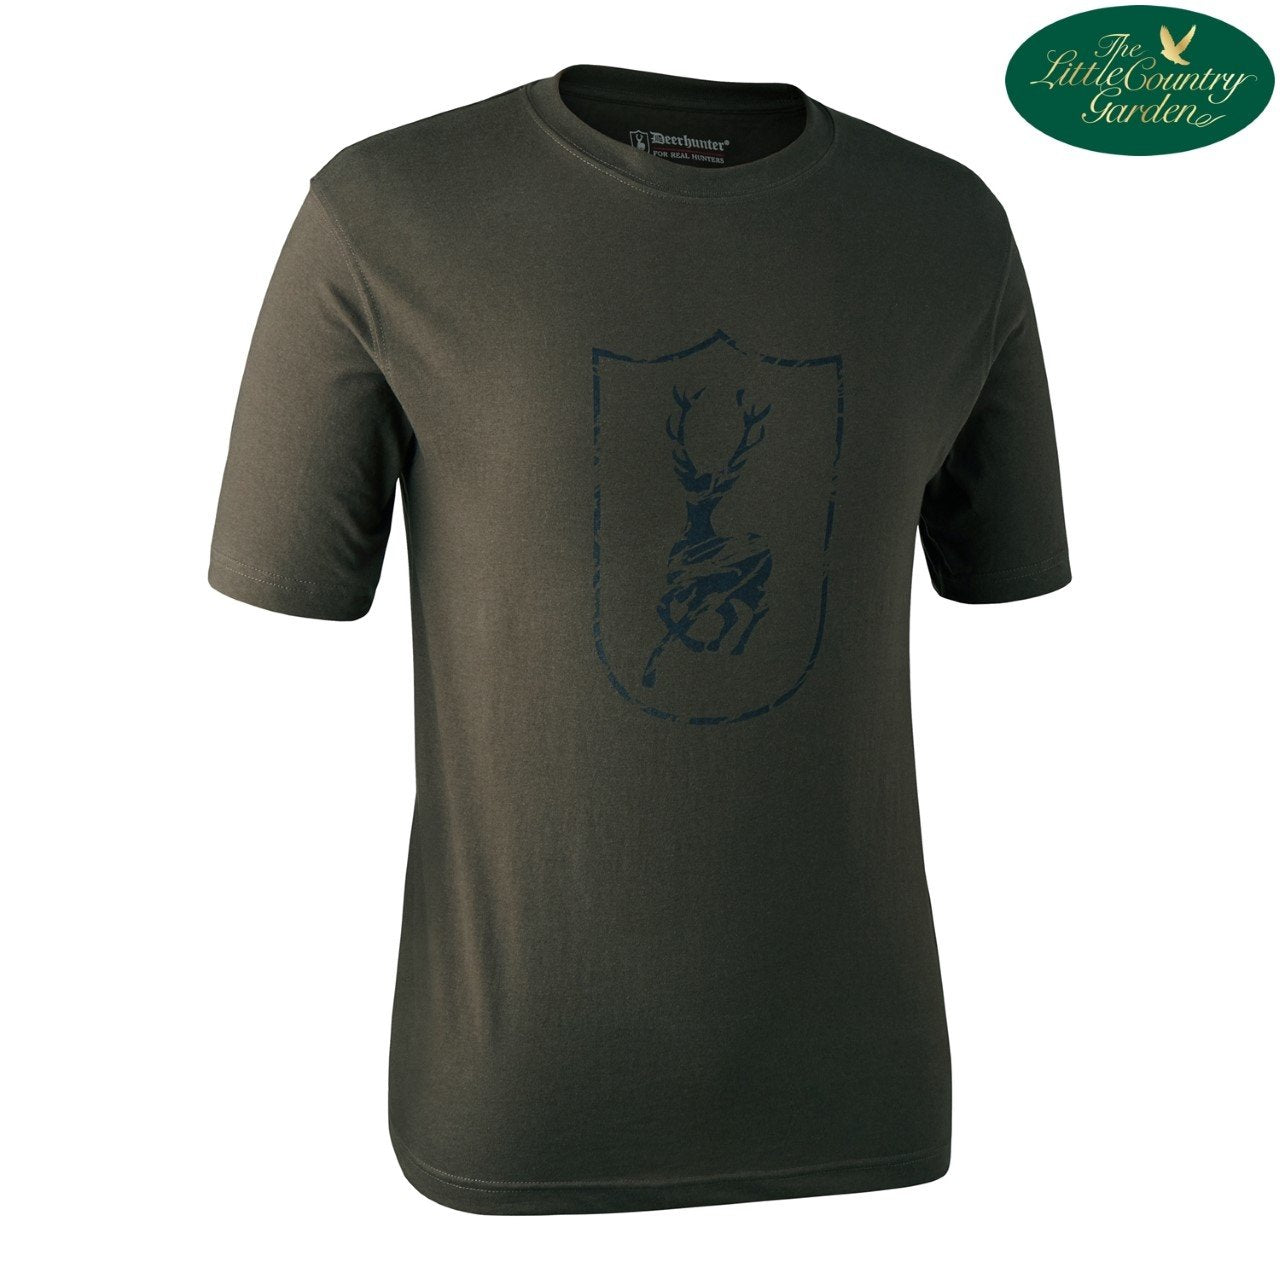 Deerhunter Stag Logo T-Shirt Bark Green Shield Short Sleeve